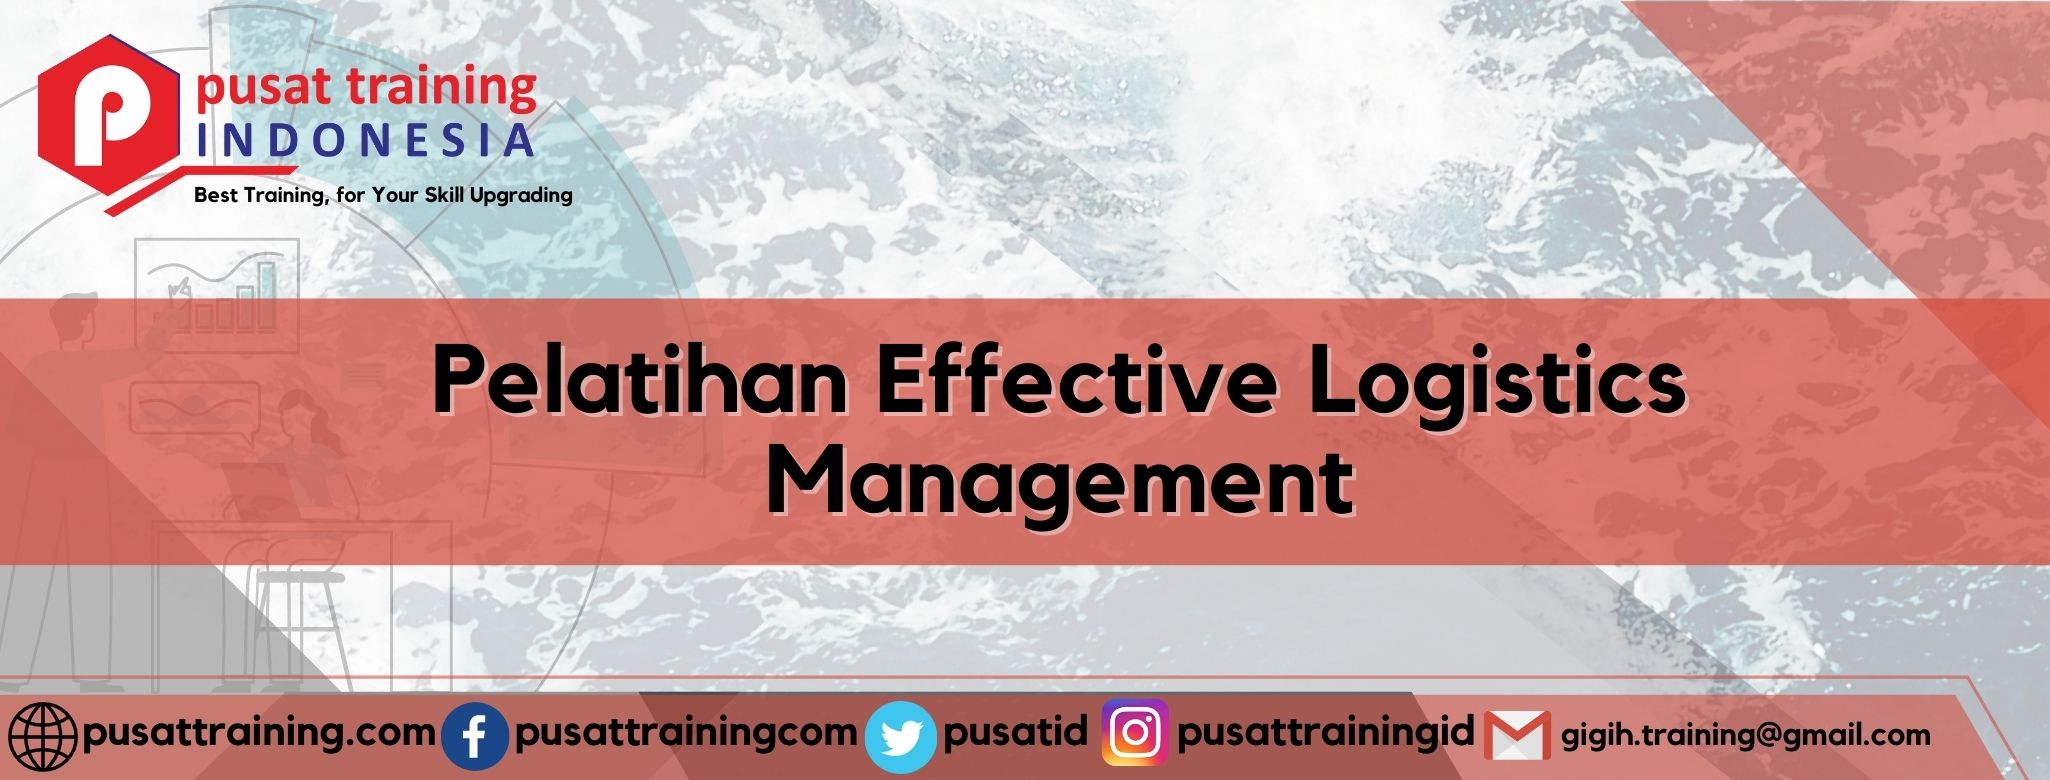 Pelatihan Effective Logistics Management